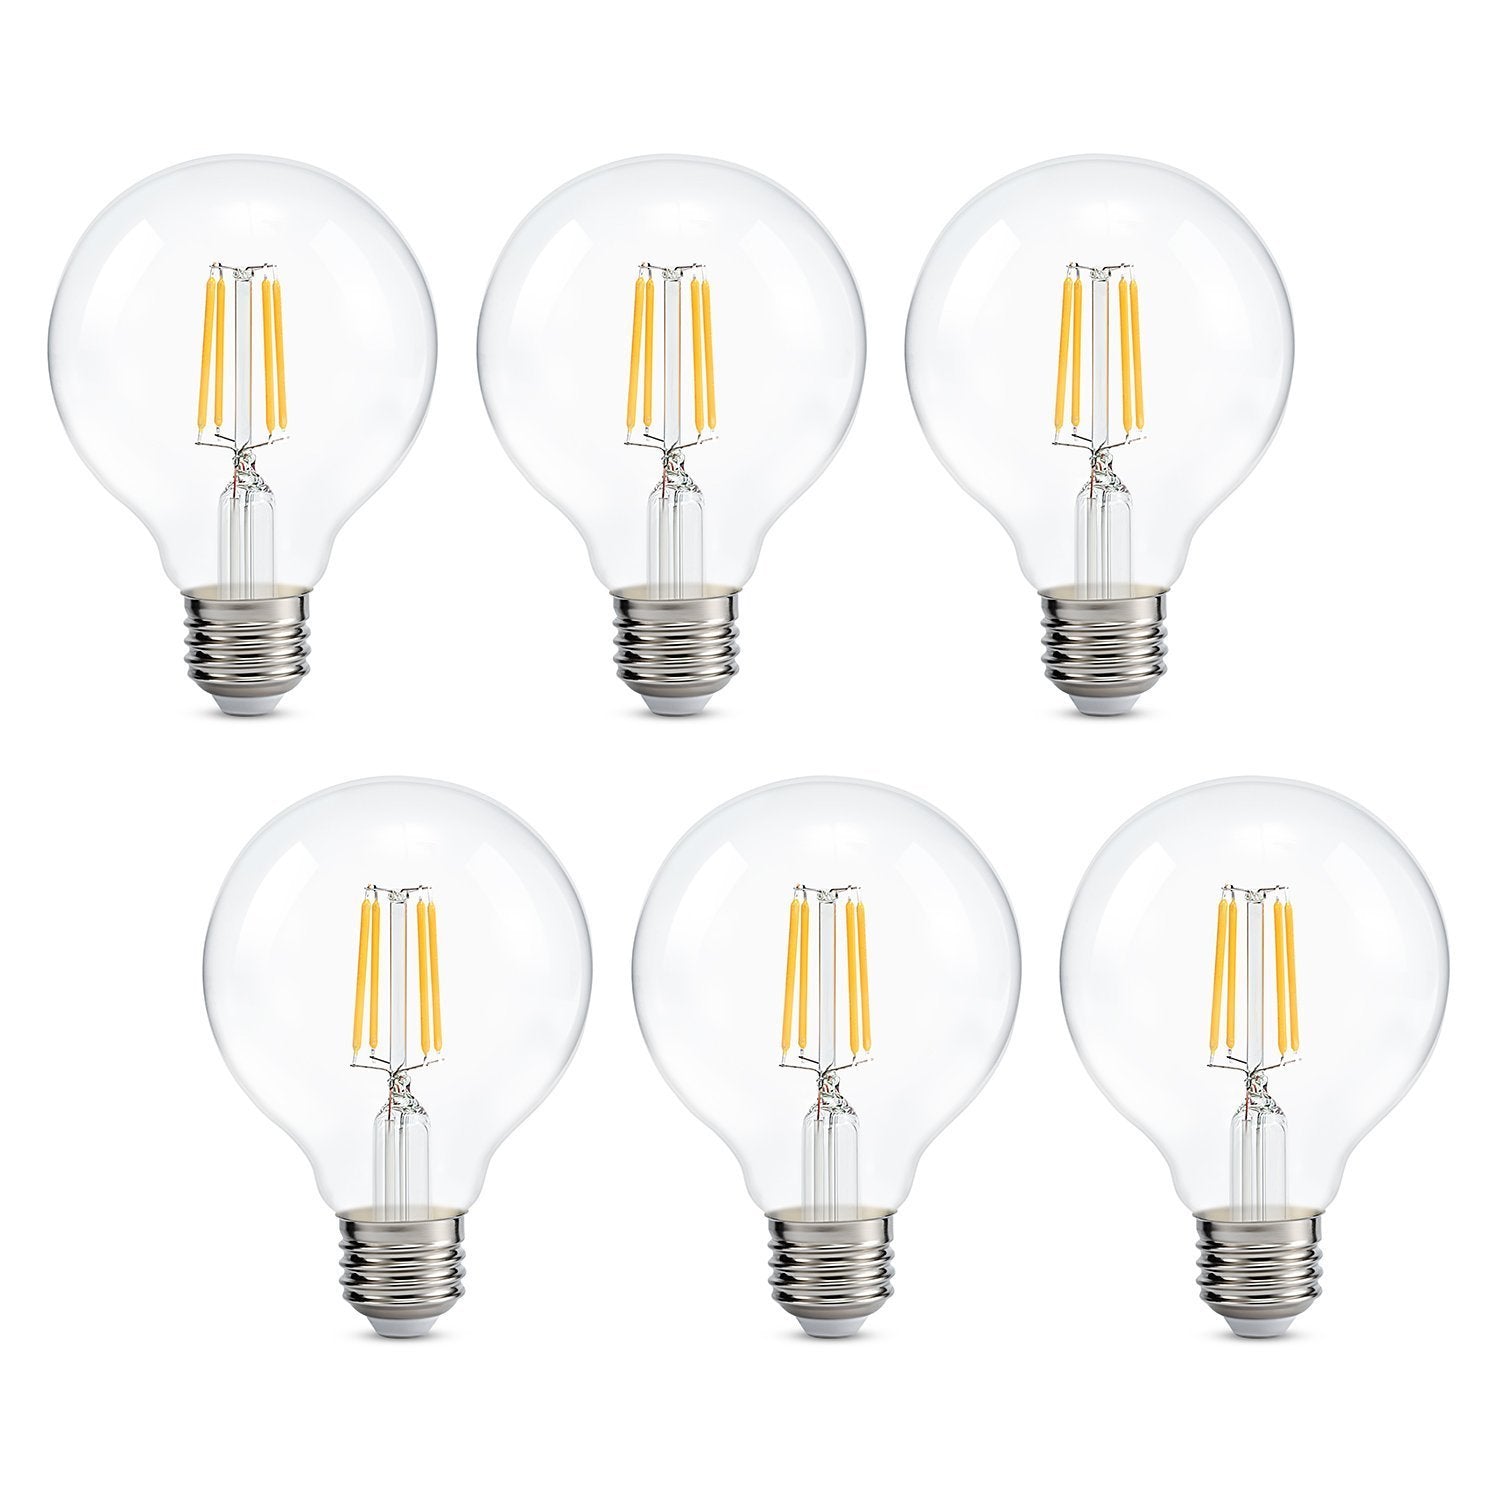 MIYOU YOUMI G80 Pack of 6 LED Edison Bulbs 4W Screw E27 Base, 40 Watt Incandescent Bulb Equivalent,2700K Warm White Industrial Energy Saving Light Bulbs